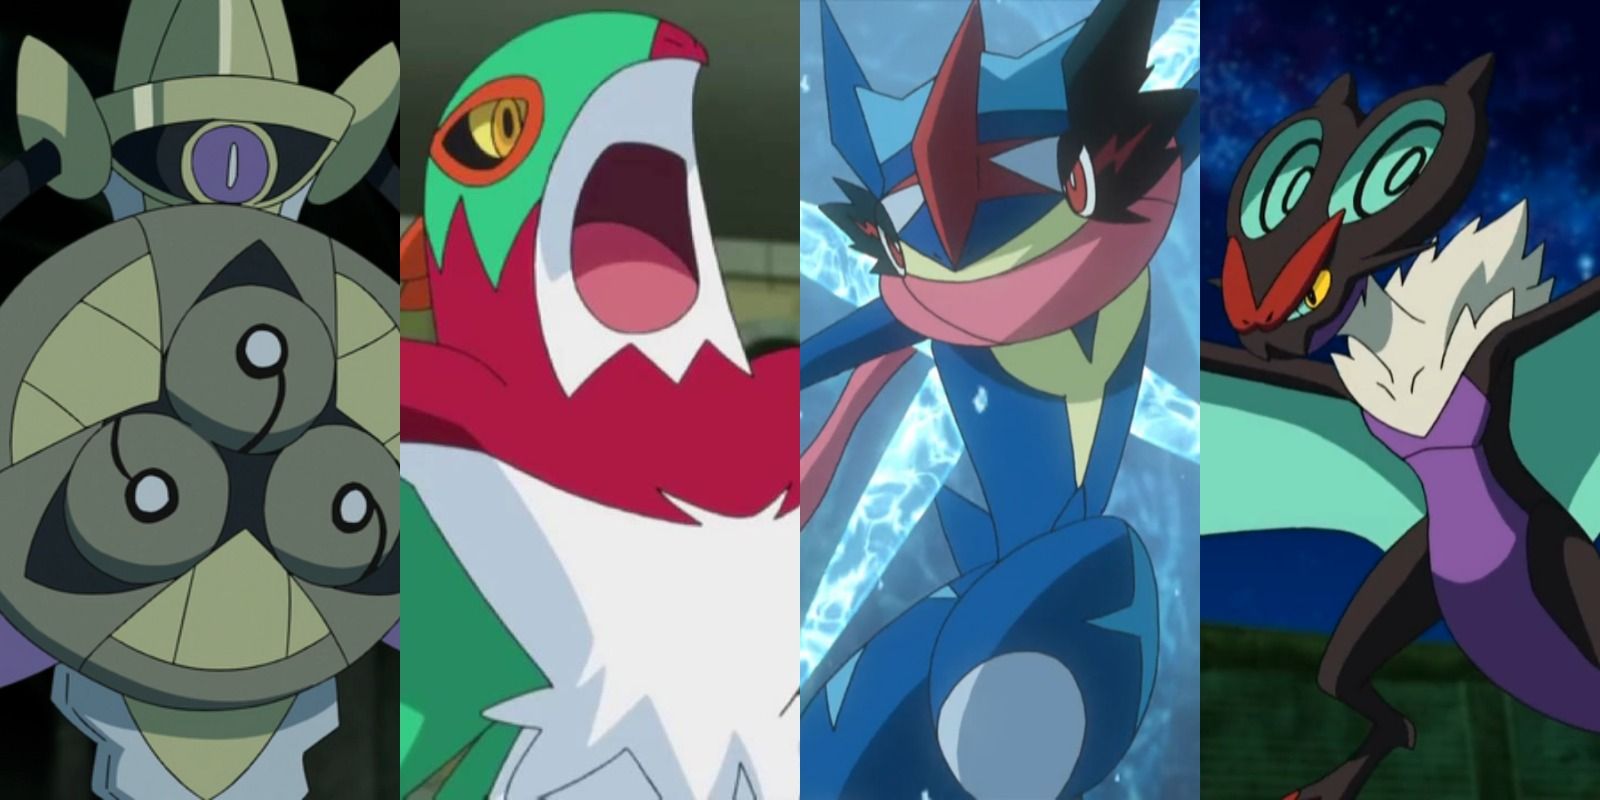 Aegislash, Hawlucha, Greninja, and Noivern in the Pokémon anime